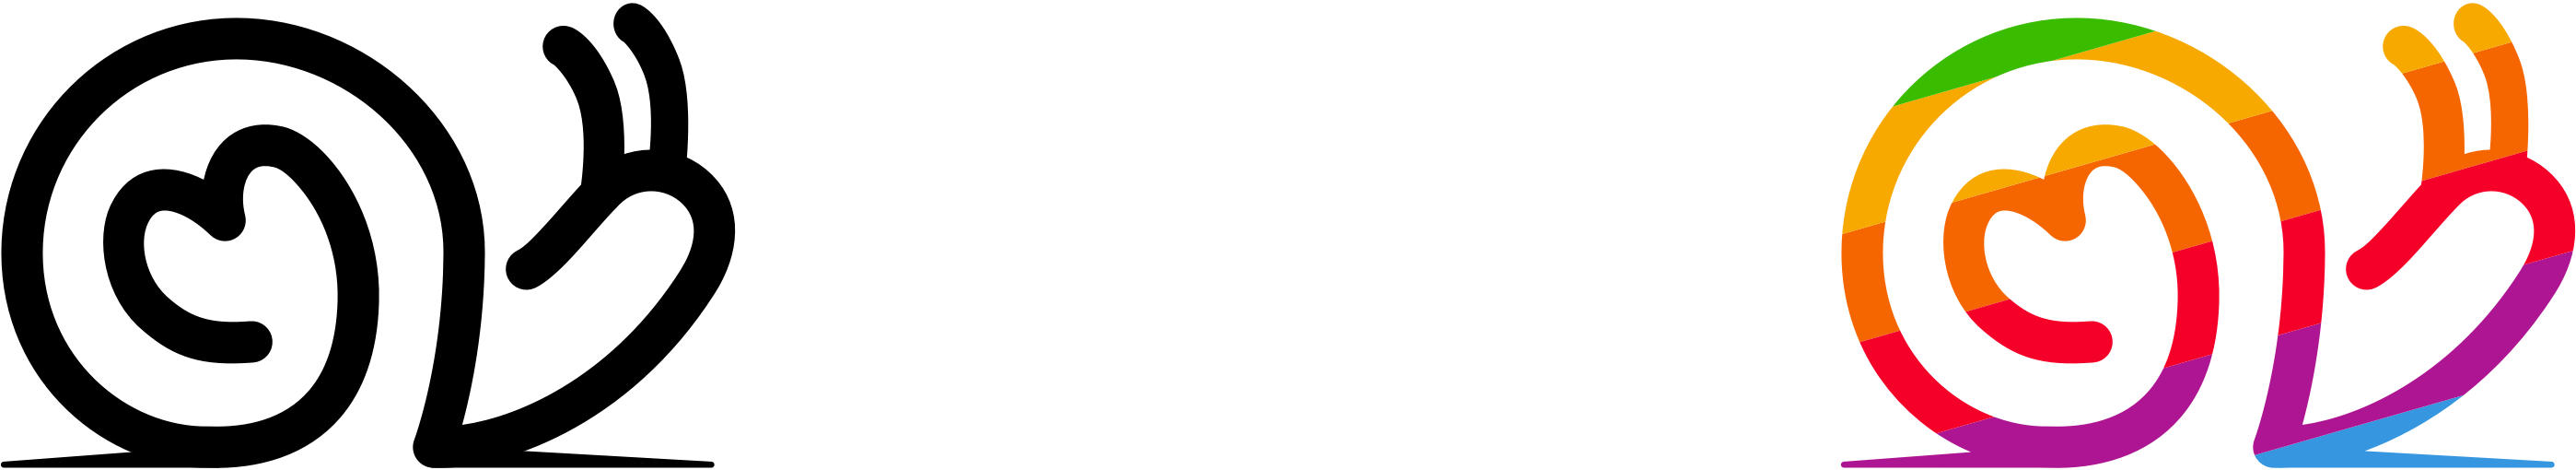 The Snailed It logo